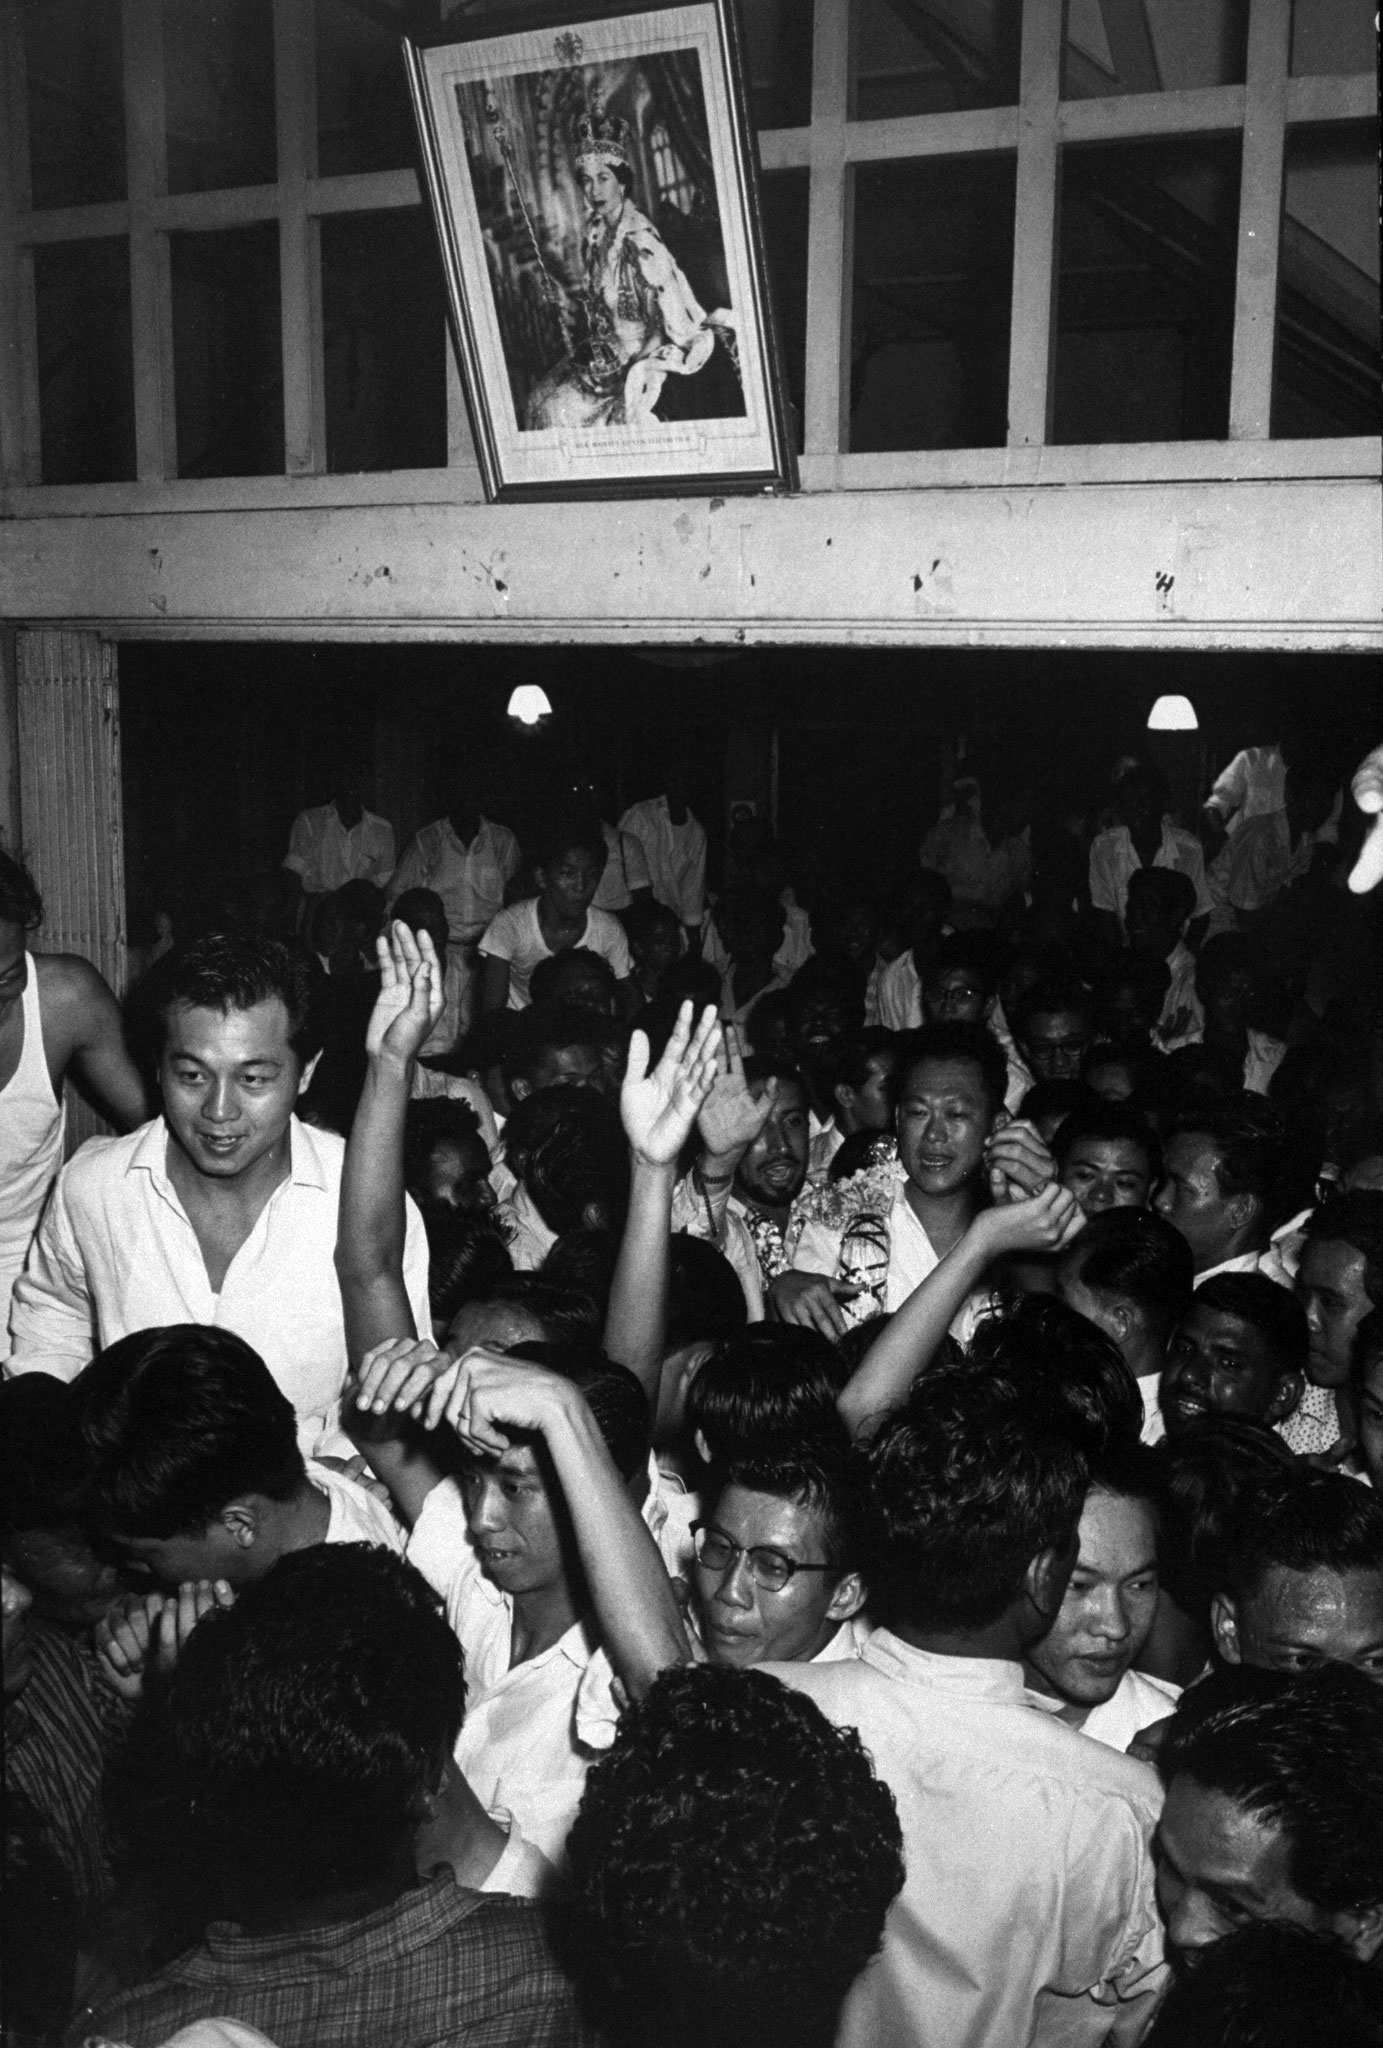 Lee Kuan Yew amongst the cheering crowd, Singapore, 1959.